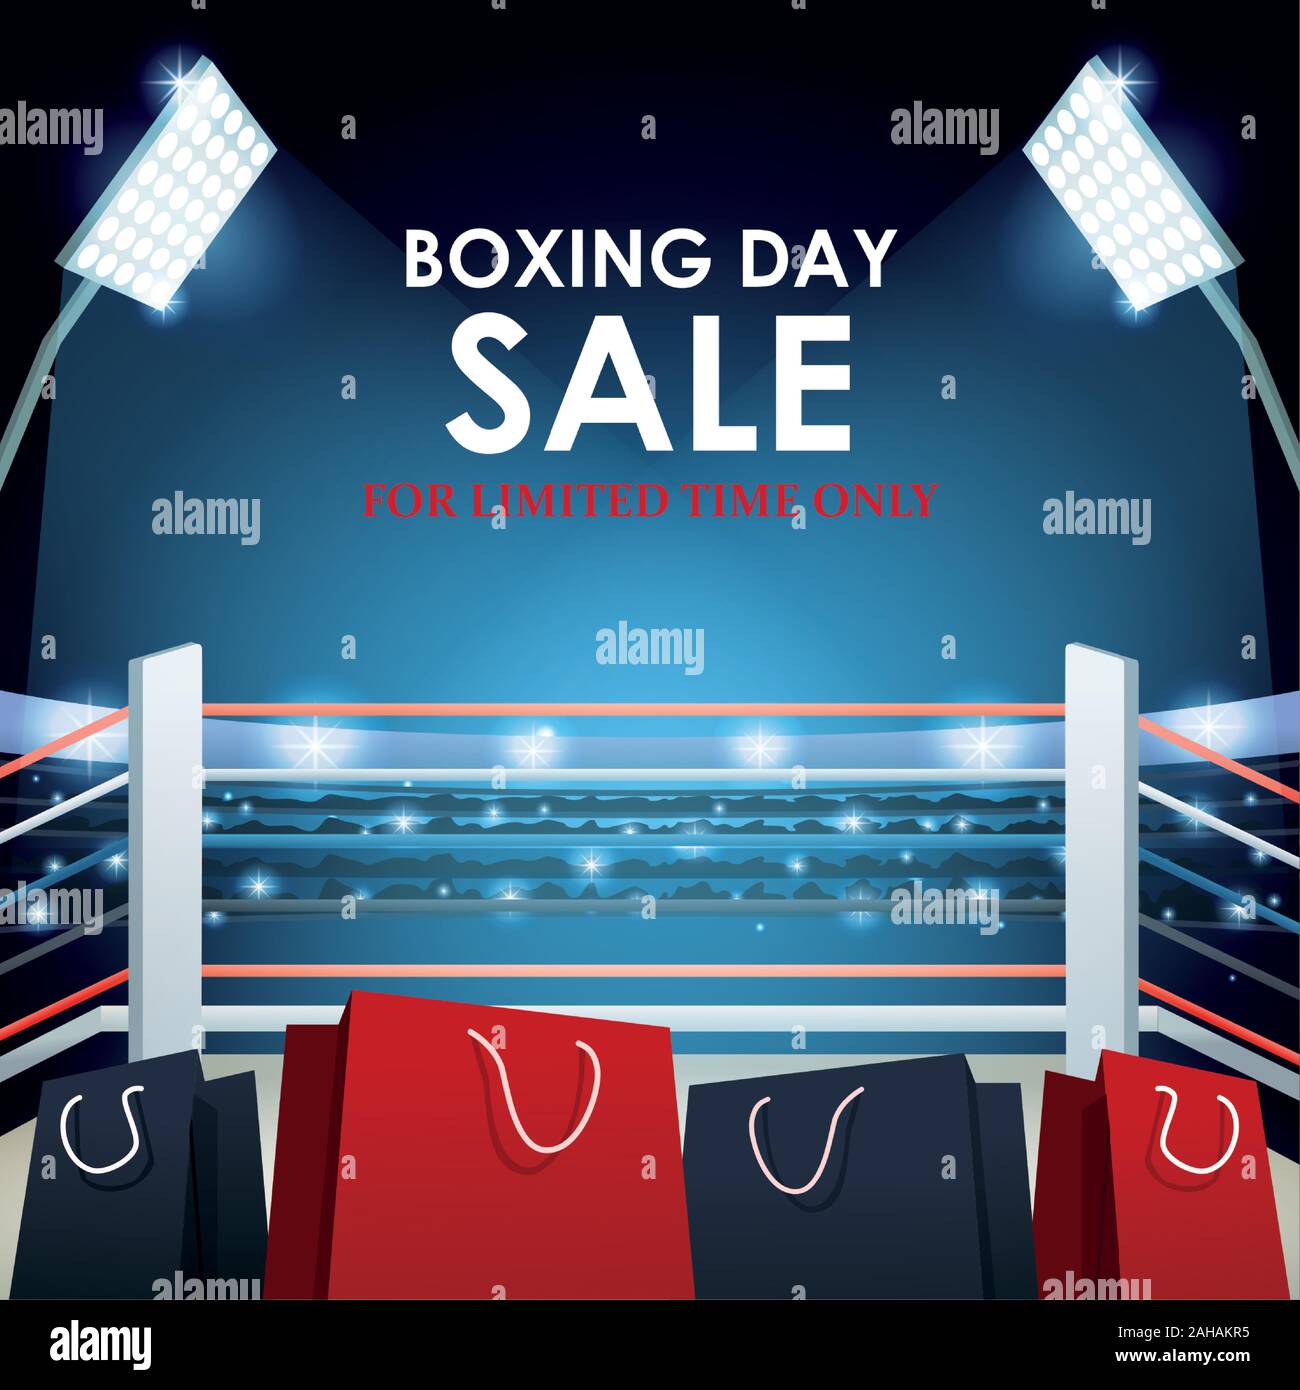 Boxing Day Dale farbenfrohes Design mit Tüten auf boxring Hintergrund, farbenfrohes Design Stock Vektor